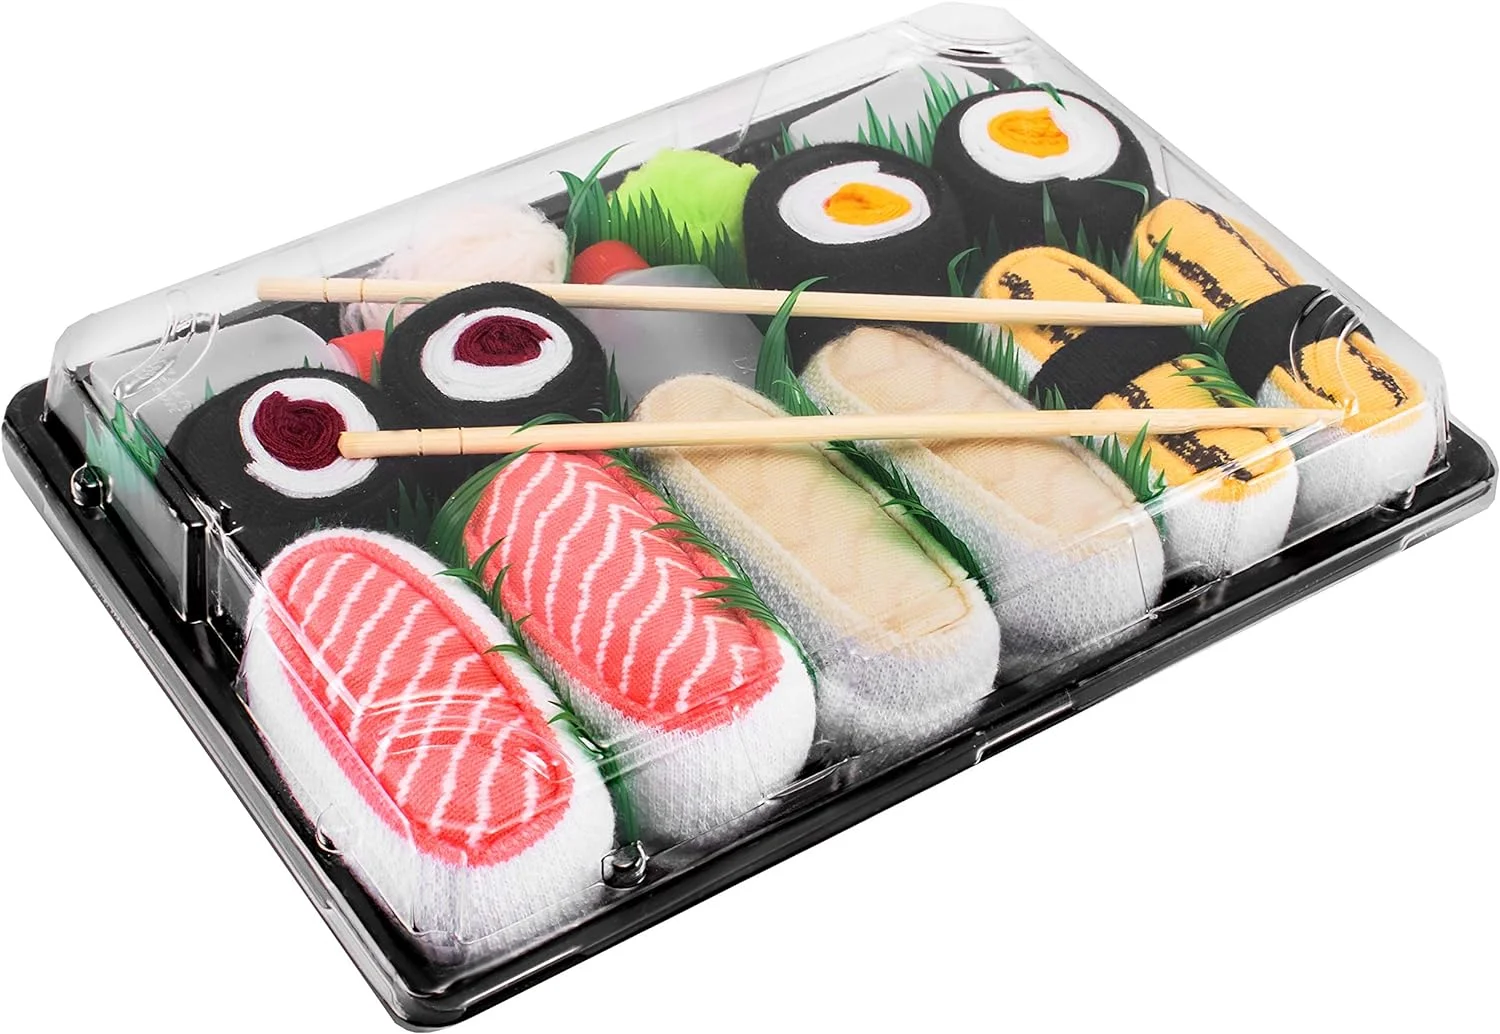 Rainbow Socks - Men's Women's - Sushi Socks Box Tamago Butterfish Salmon Maki - 5 Pairs